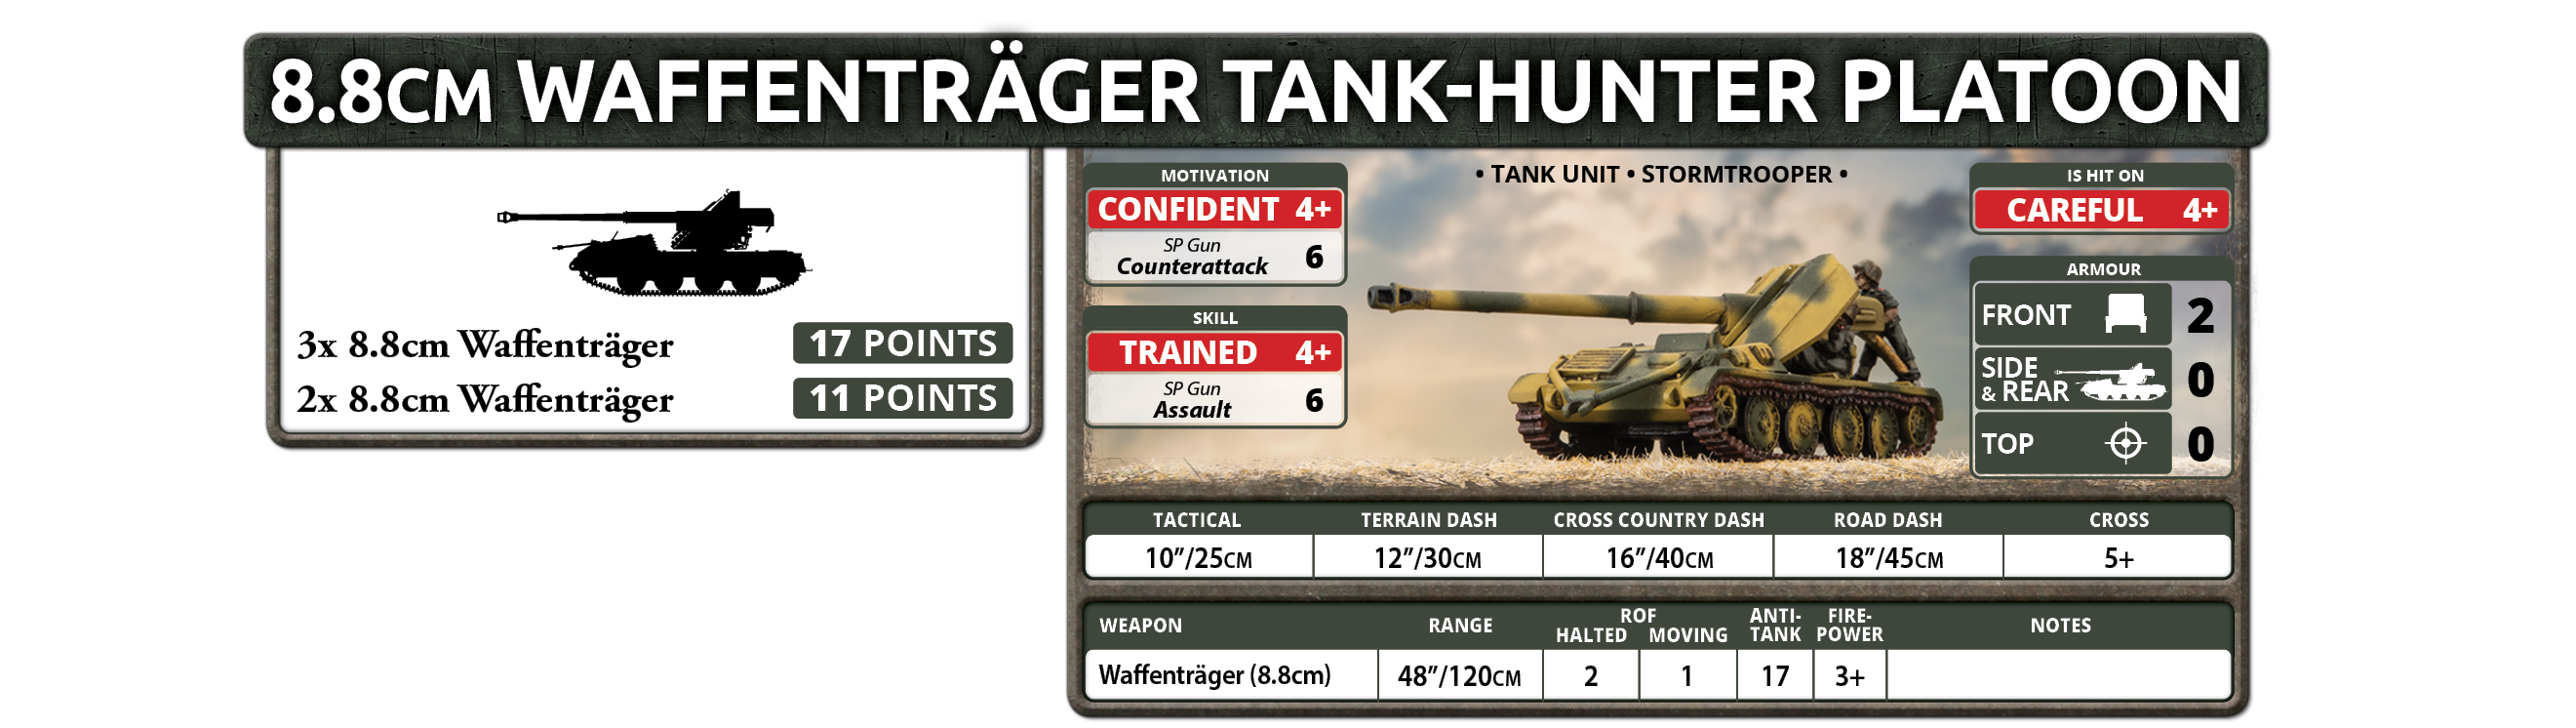 8.8cm Wäffentrager Tank-Hunter Platoon